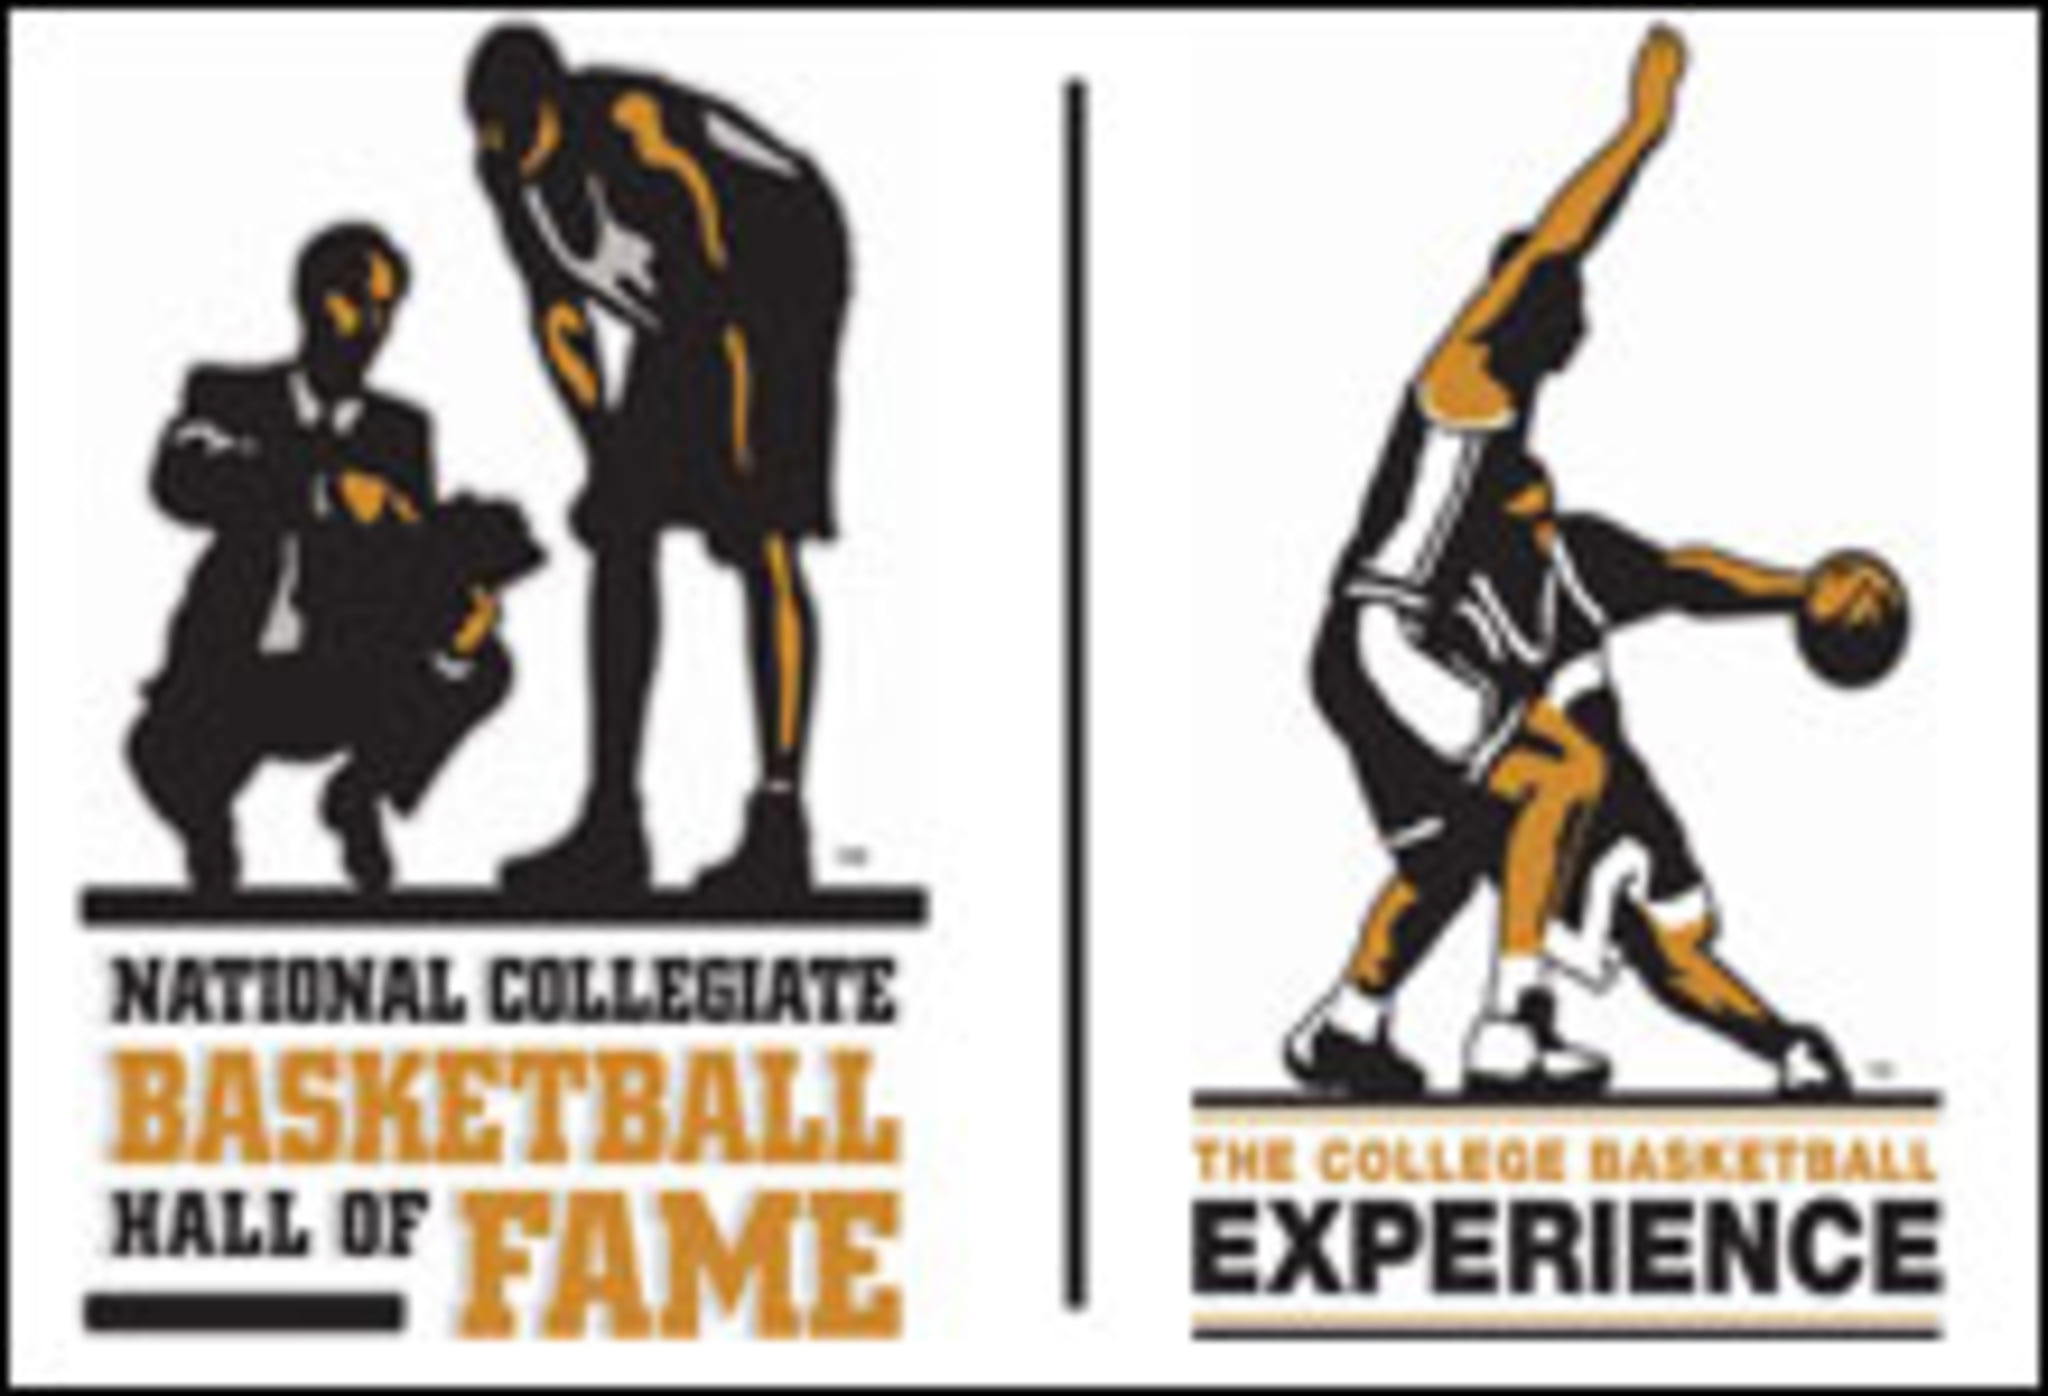 National Collegiate Basketball Hall of Fame